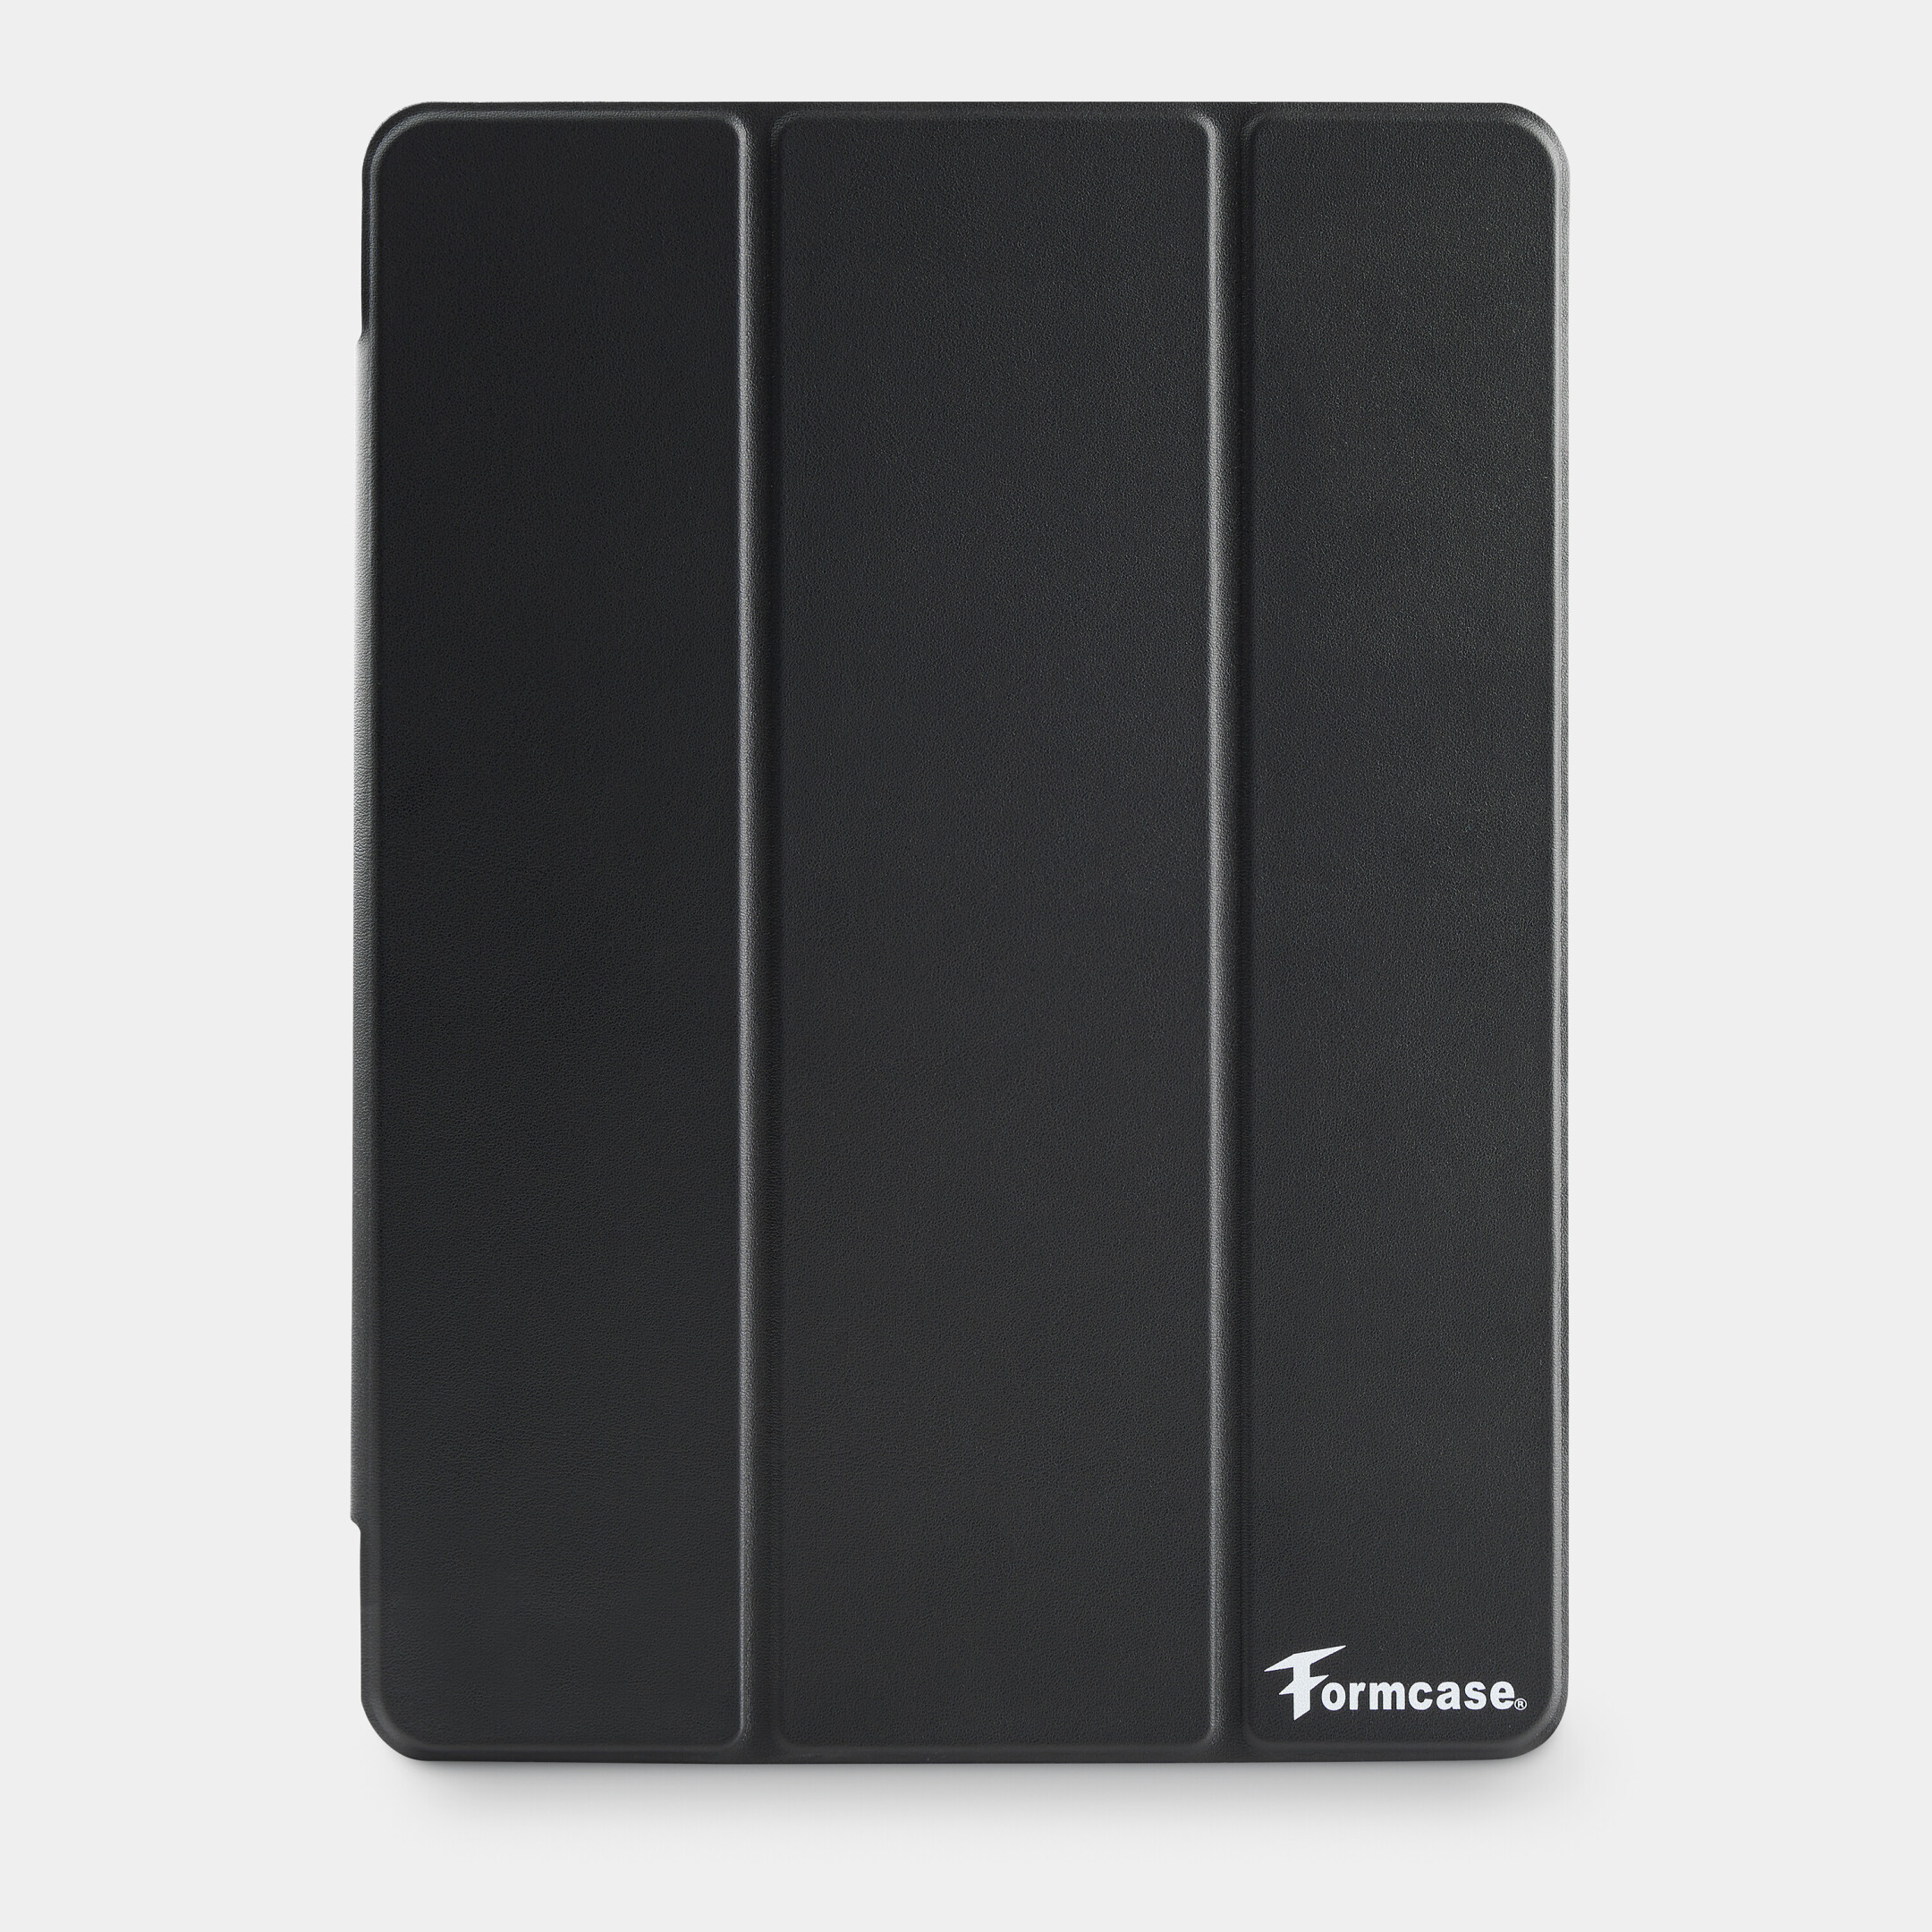 Formcase-Das-Cover-fur-iPad-10-2-7-8-9-Generation